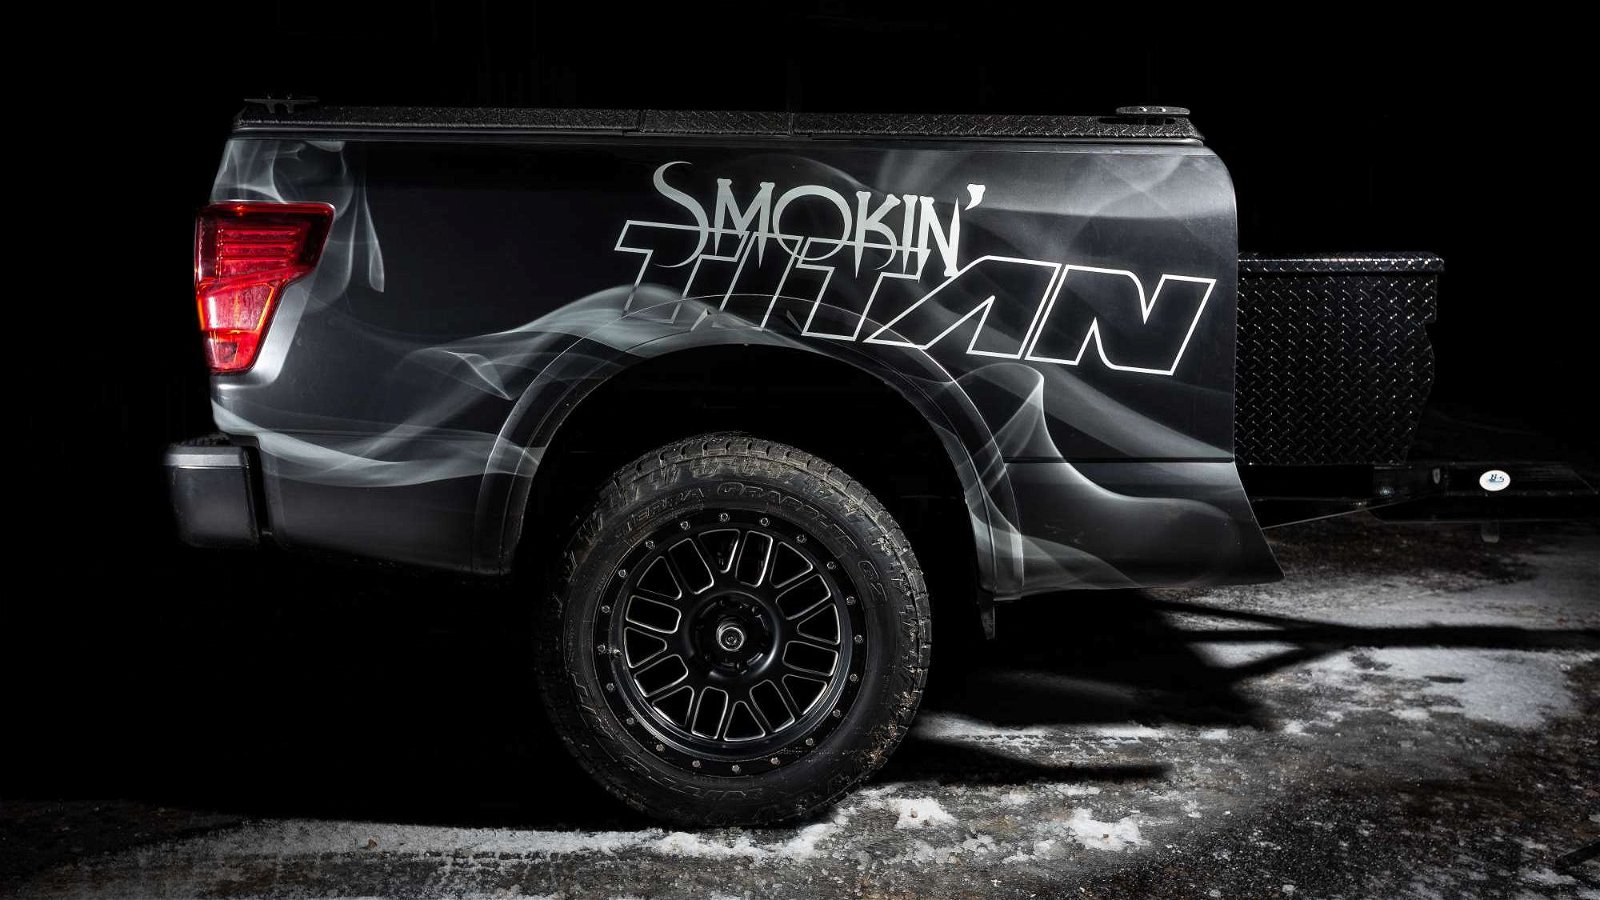 Nissan Smokin Titan 05 @ 2018 Work Truck